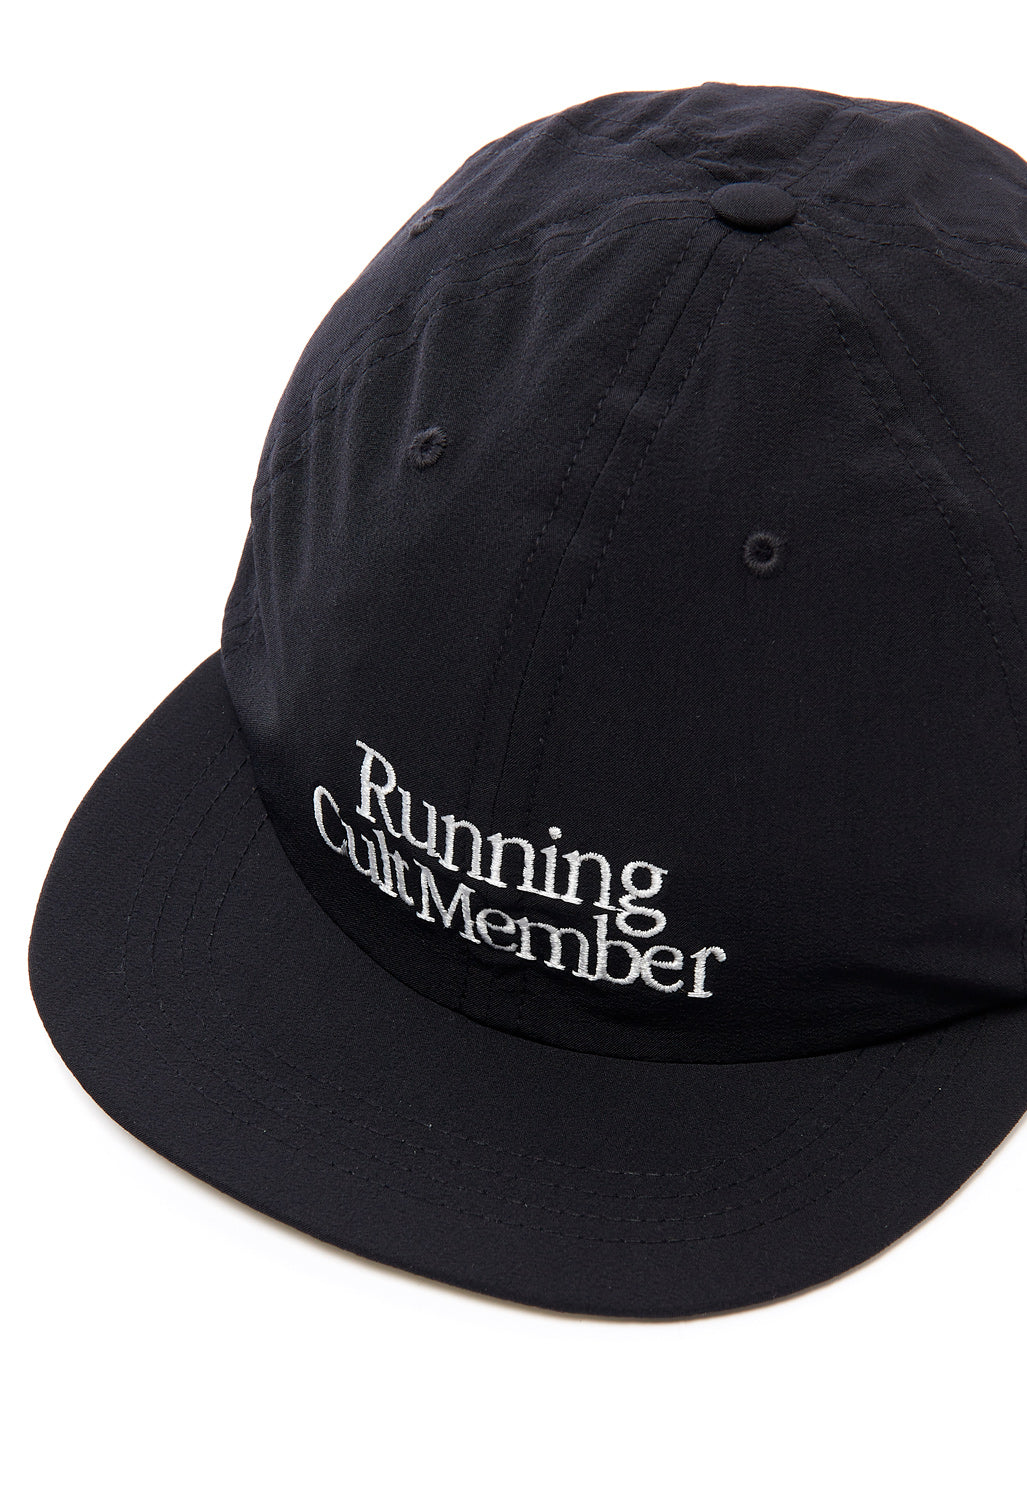 Satisfy Men's PeaceShell Running Cap – Black